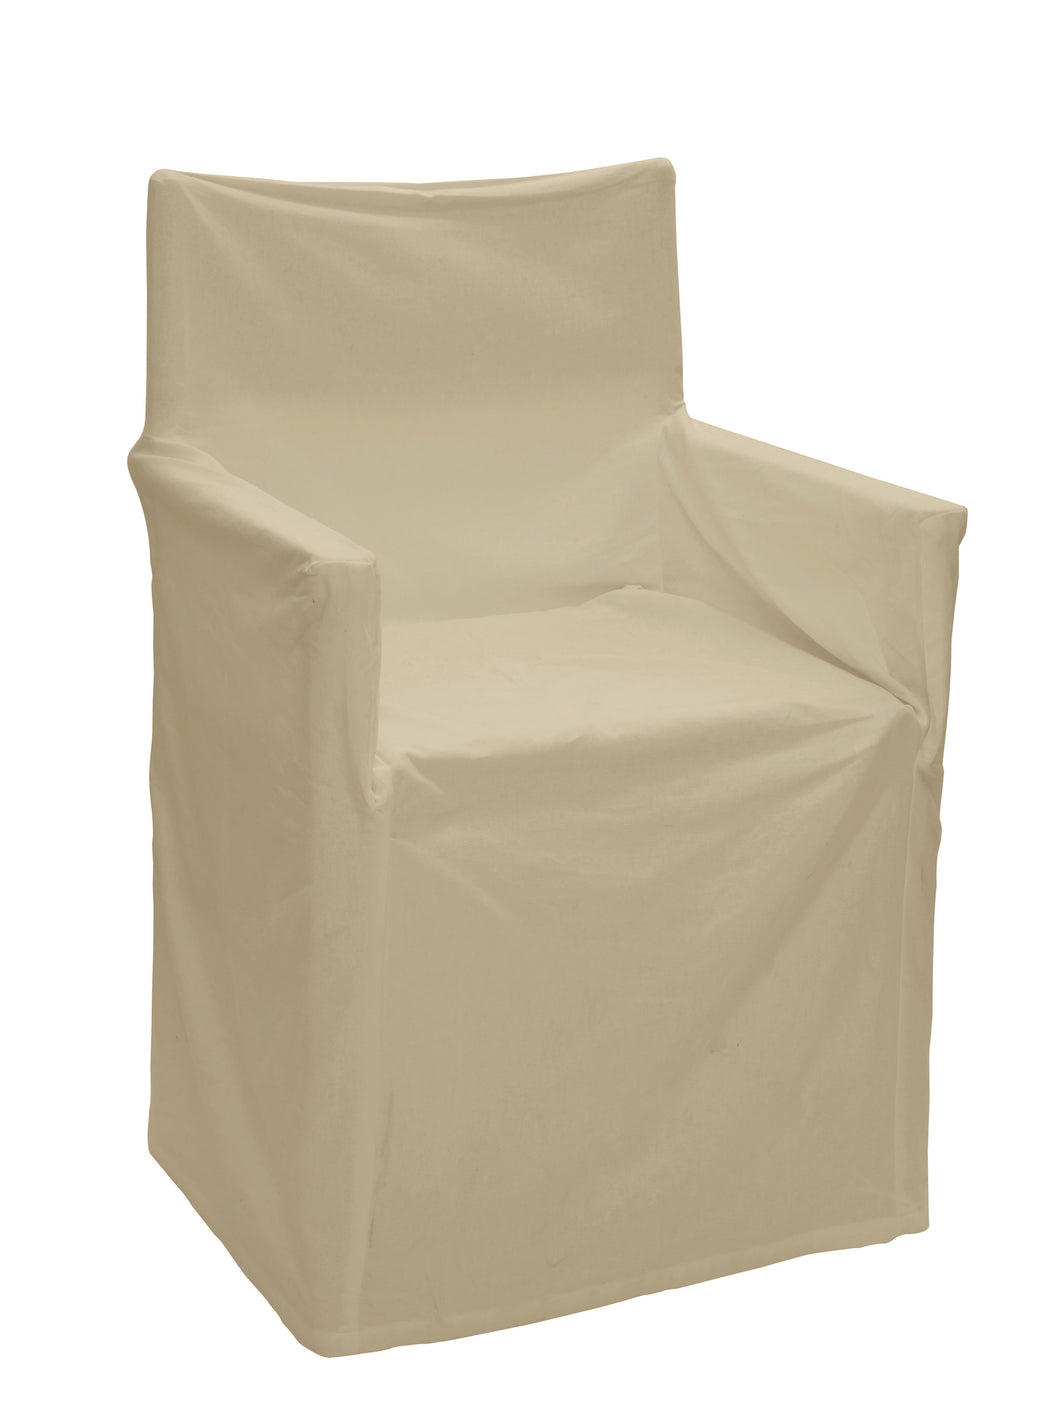 RANS Alfresco Director Chair Covers 100% Cotton